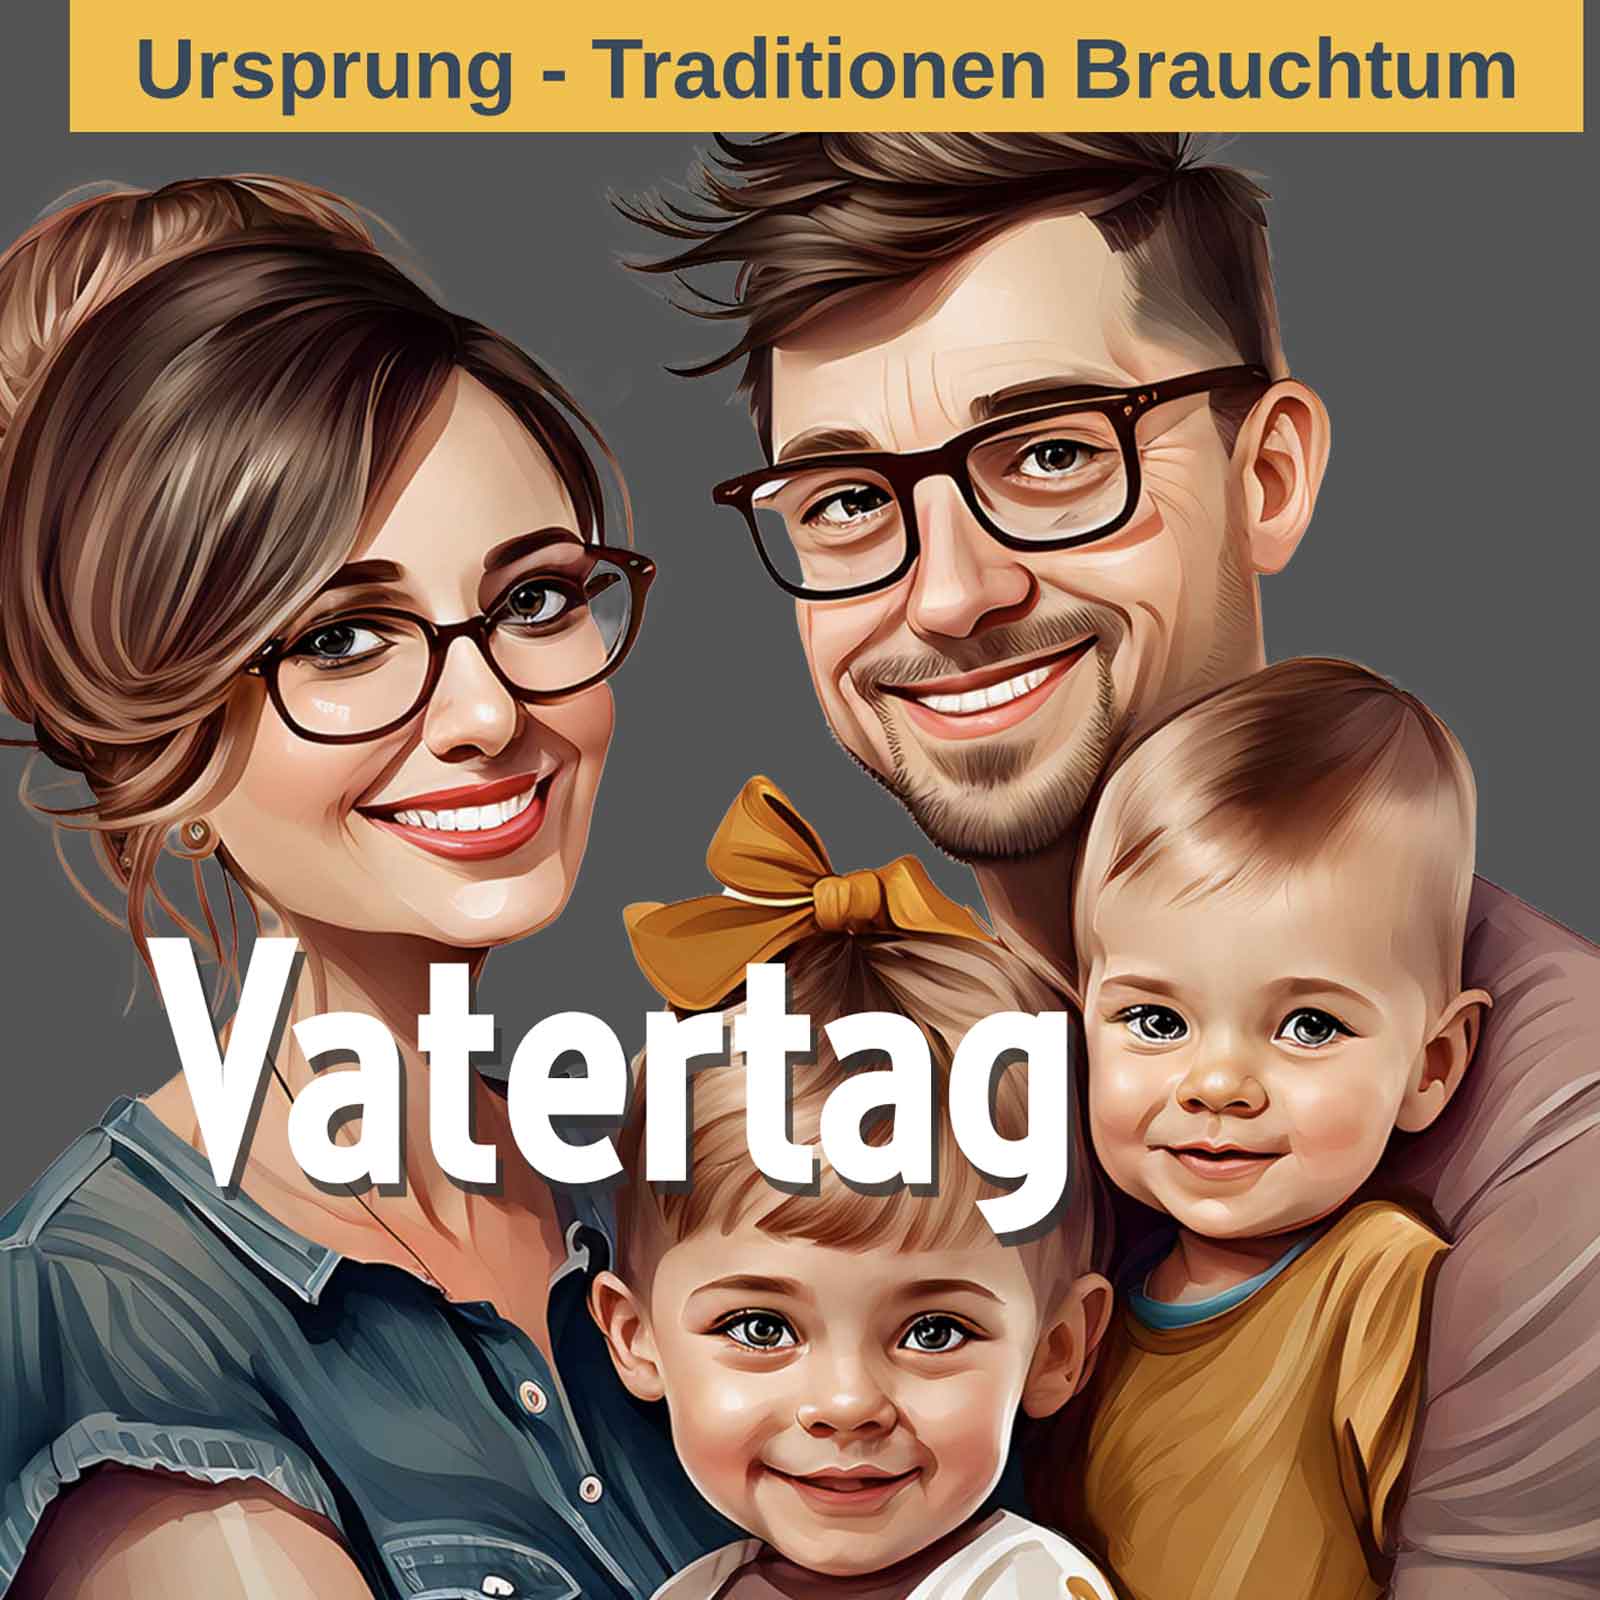 Vatertag - Ursprung, Tradition, Brauchtumg